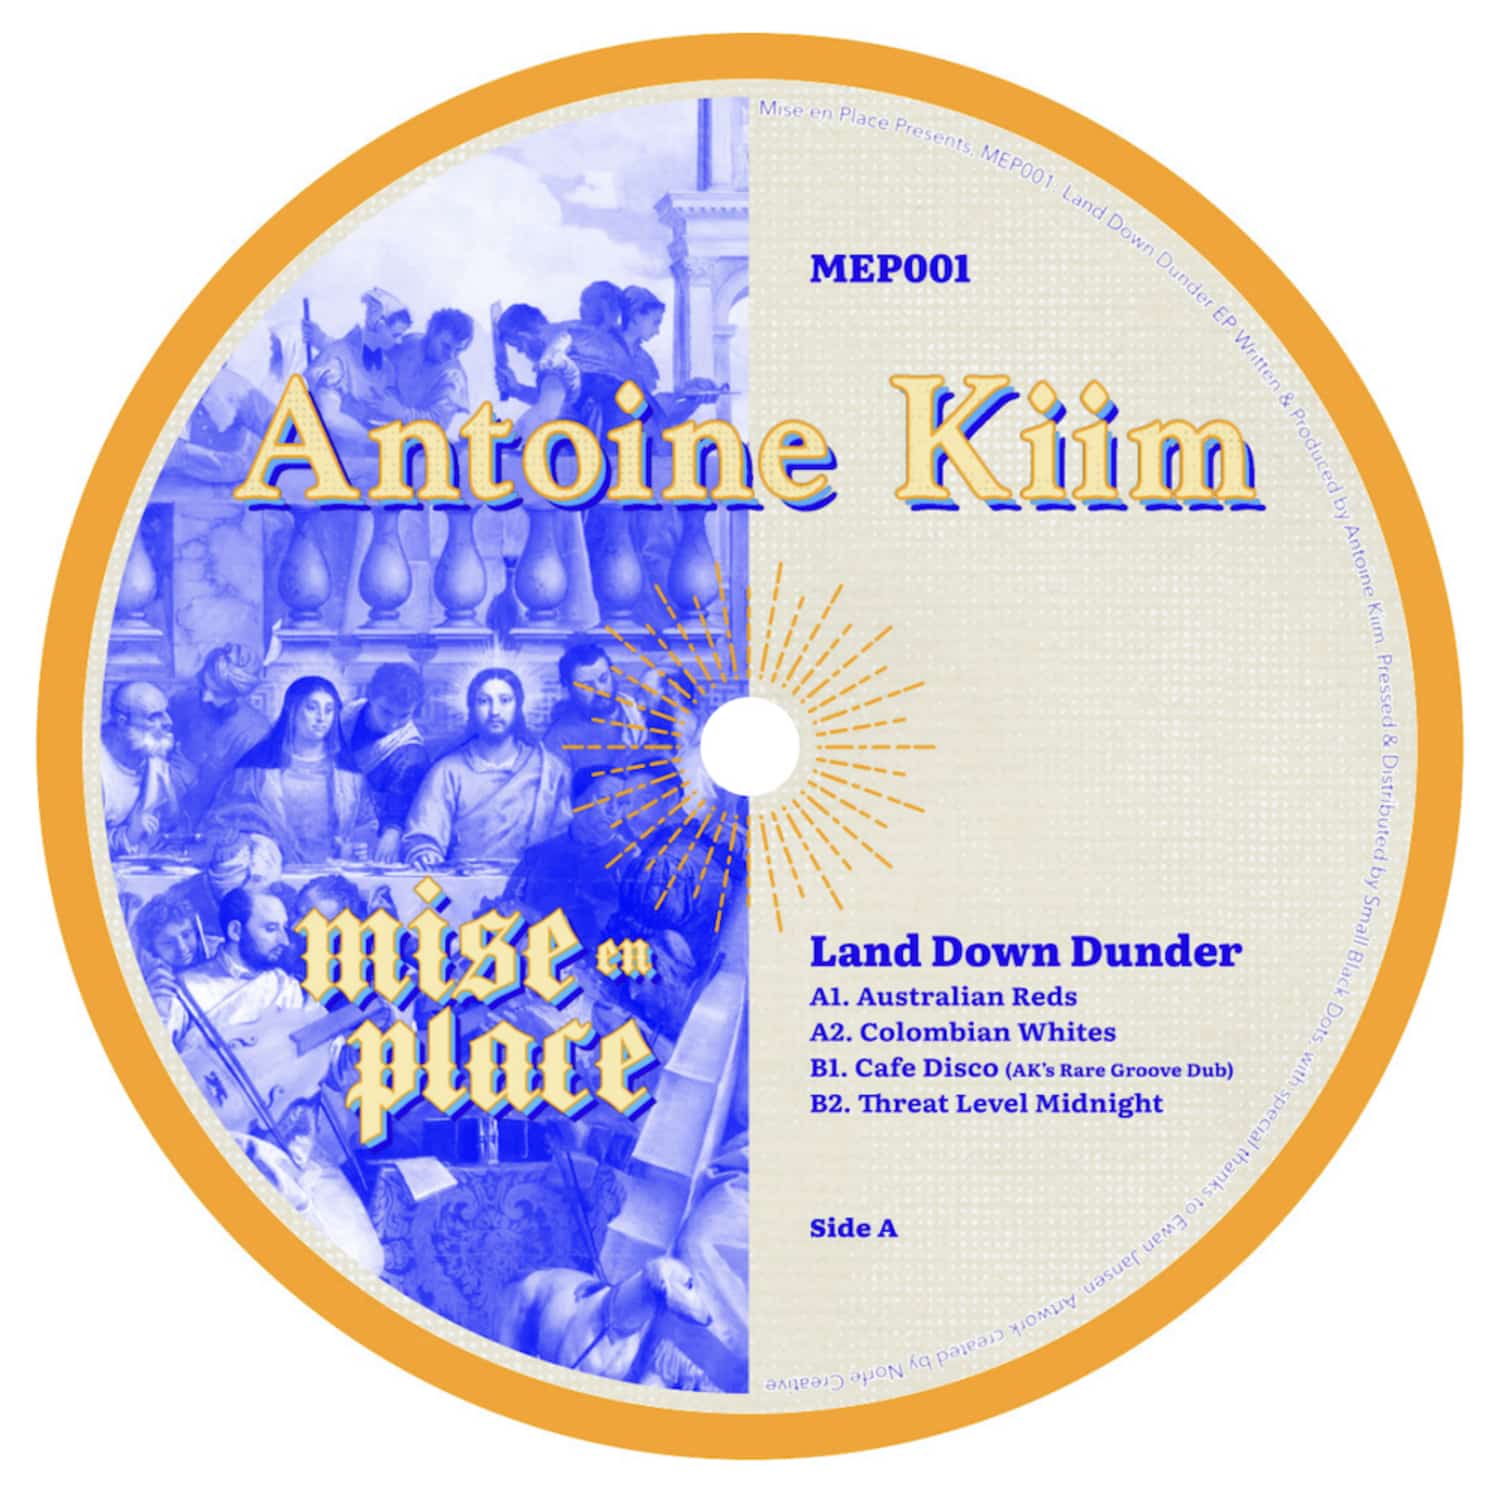 Antoine Kiim - LAND DOWN UNDER EP